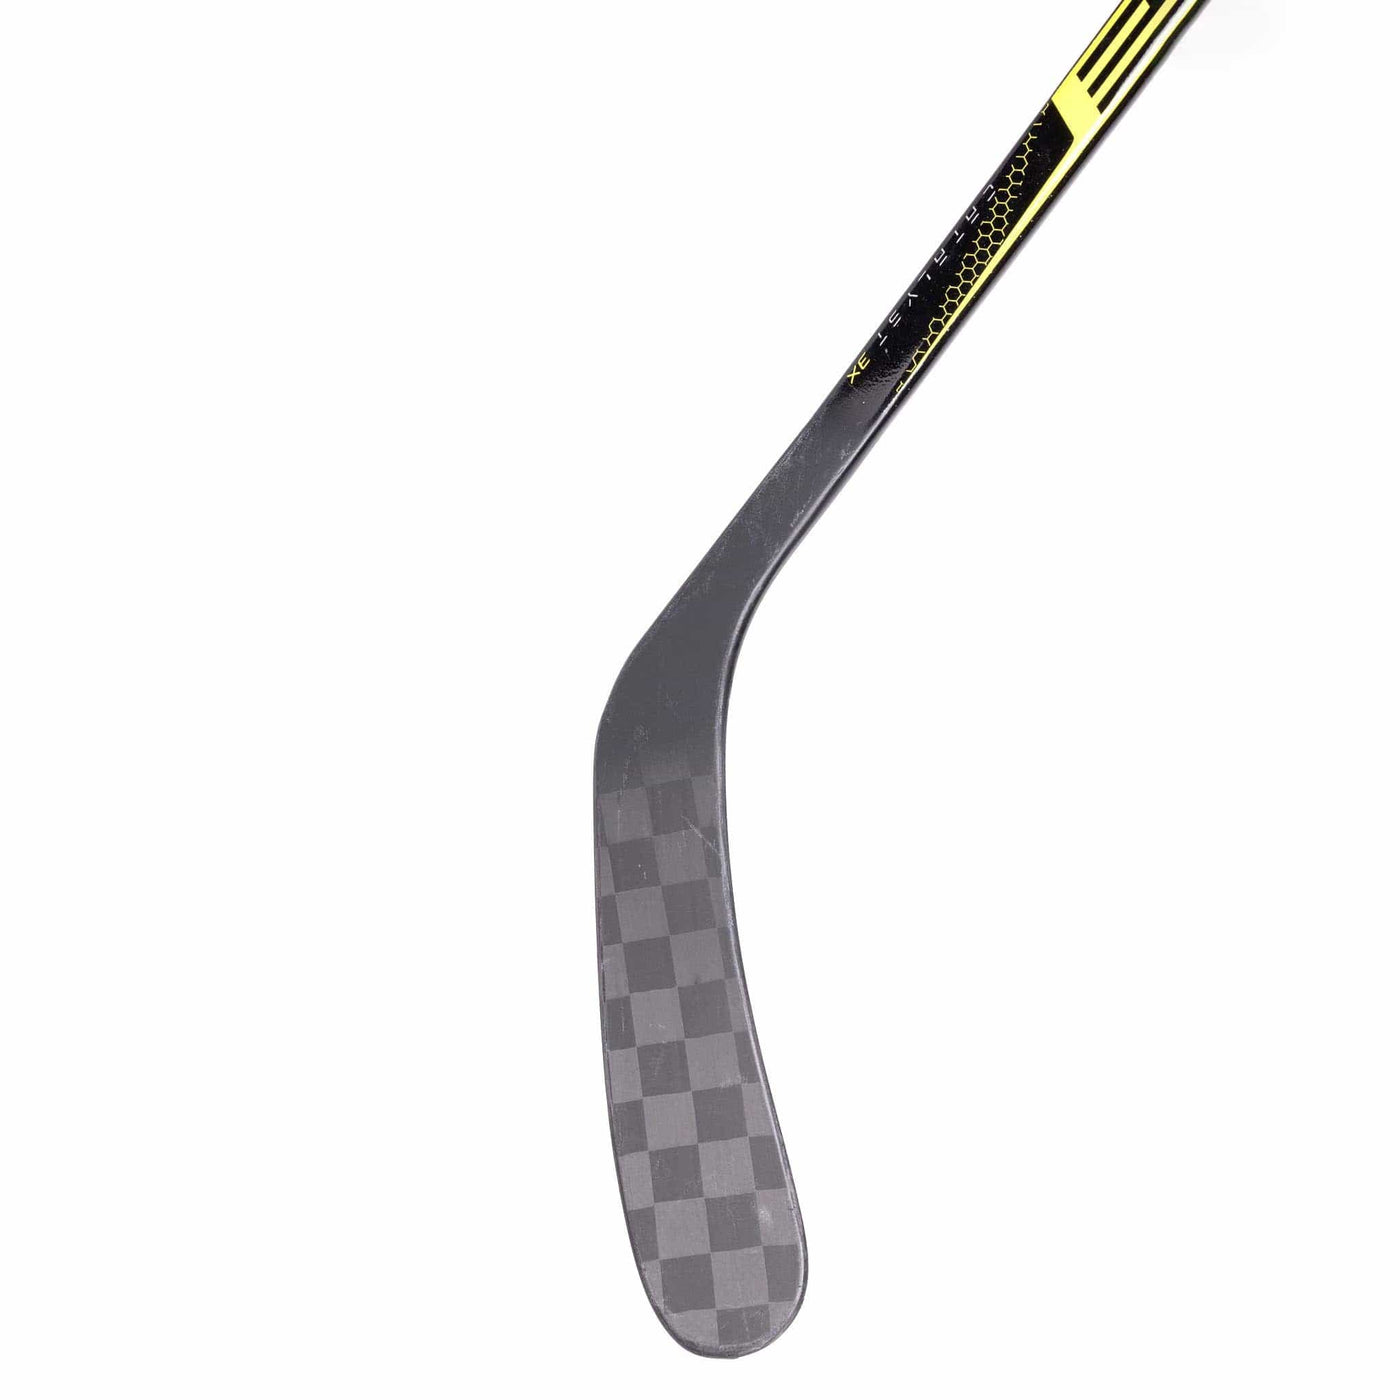 TRUE Catalyst 3X Junior Hockey Stick - 40 Flex